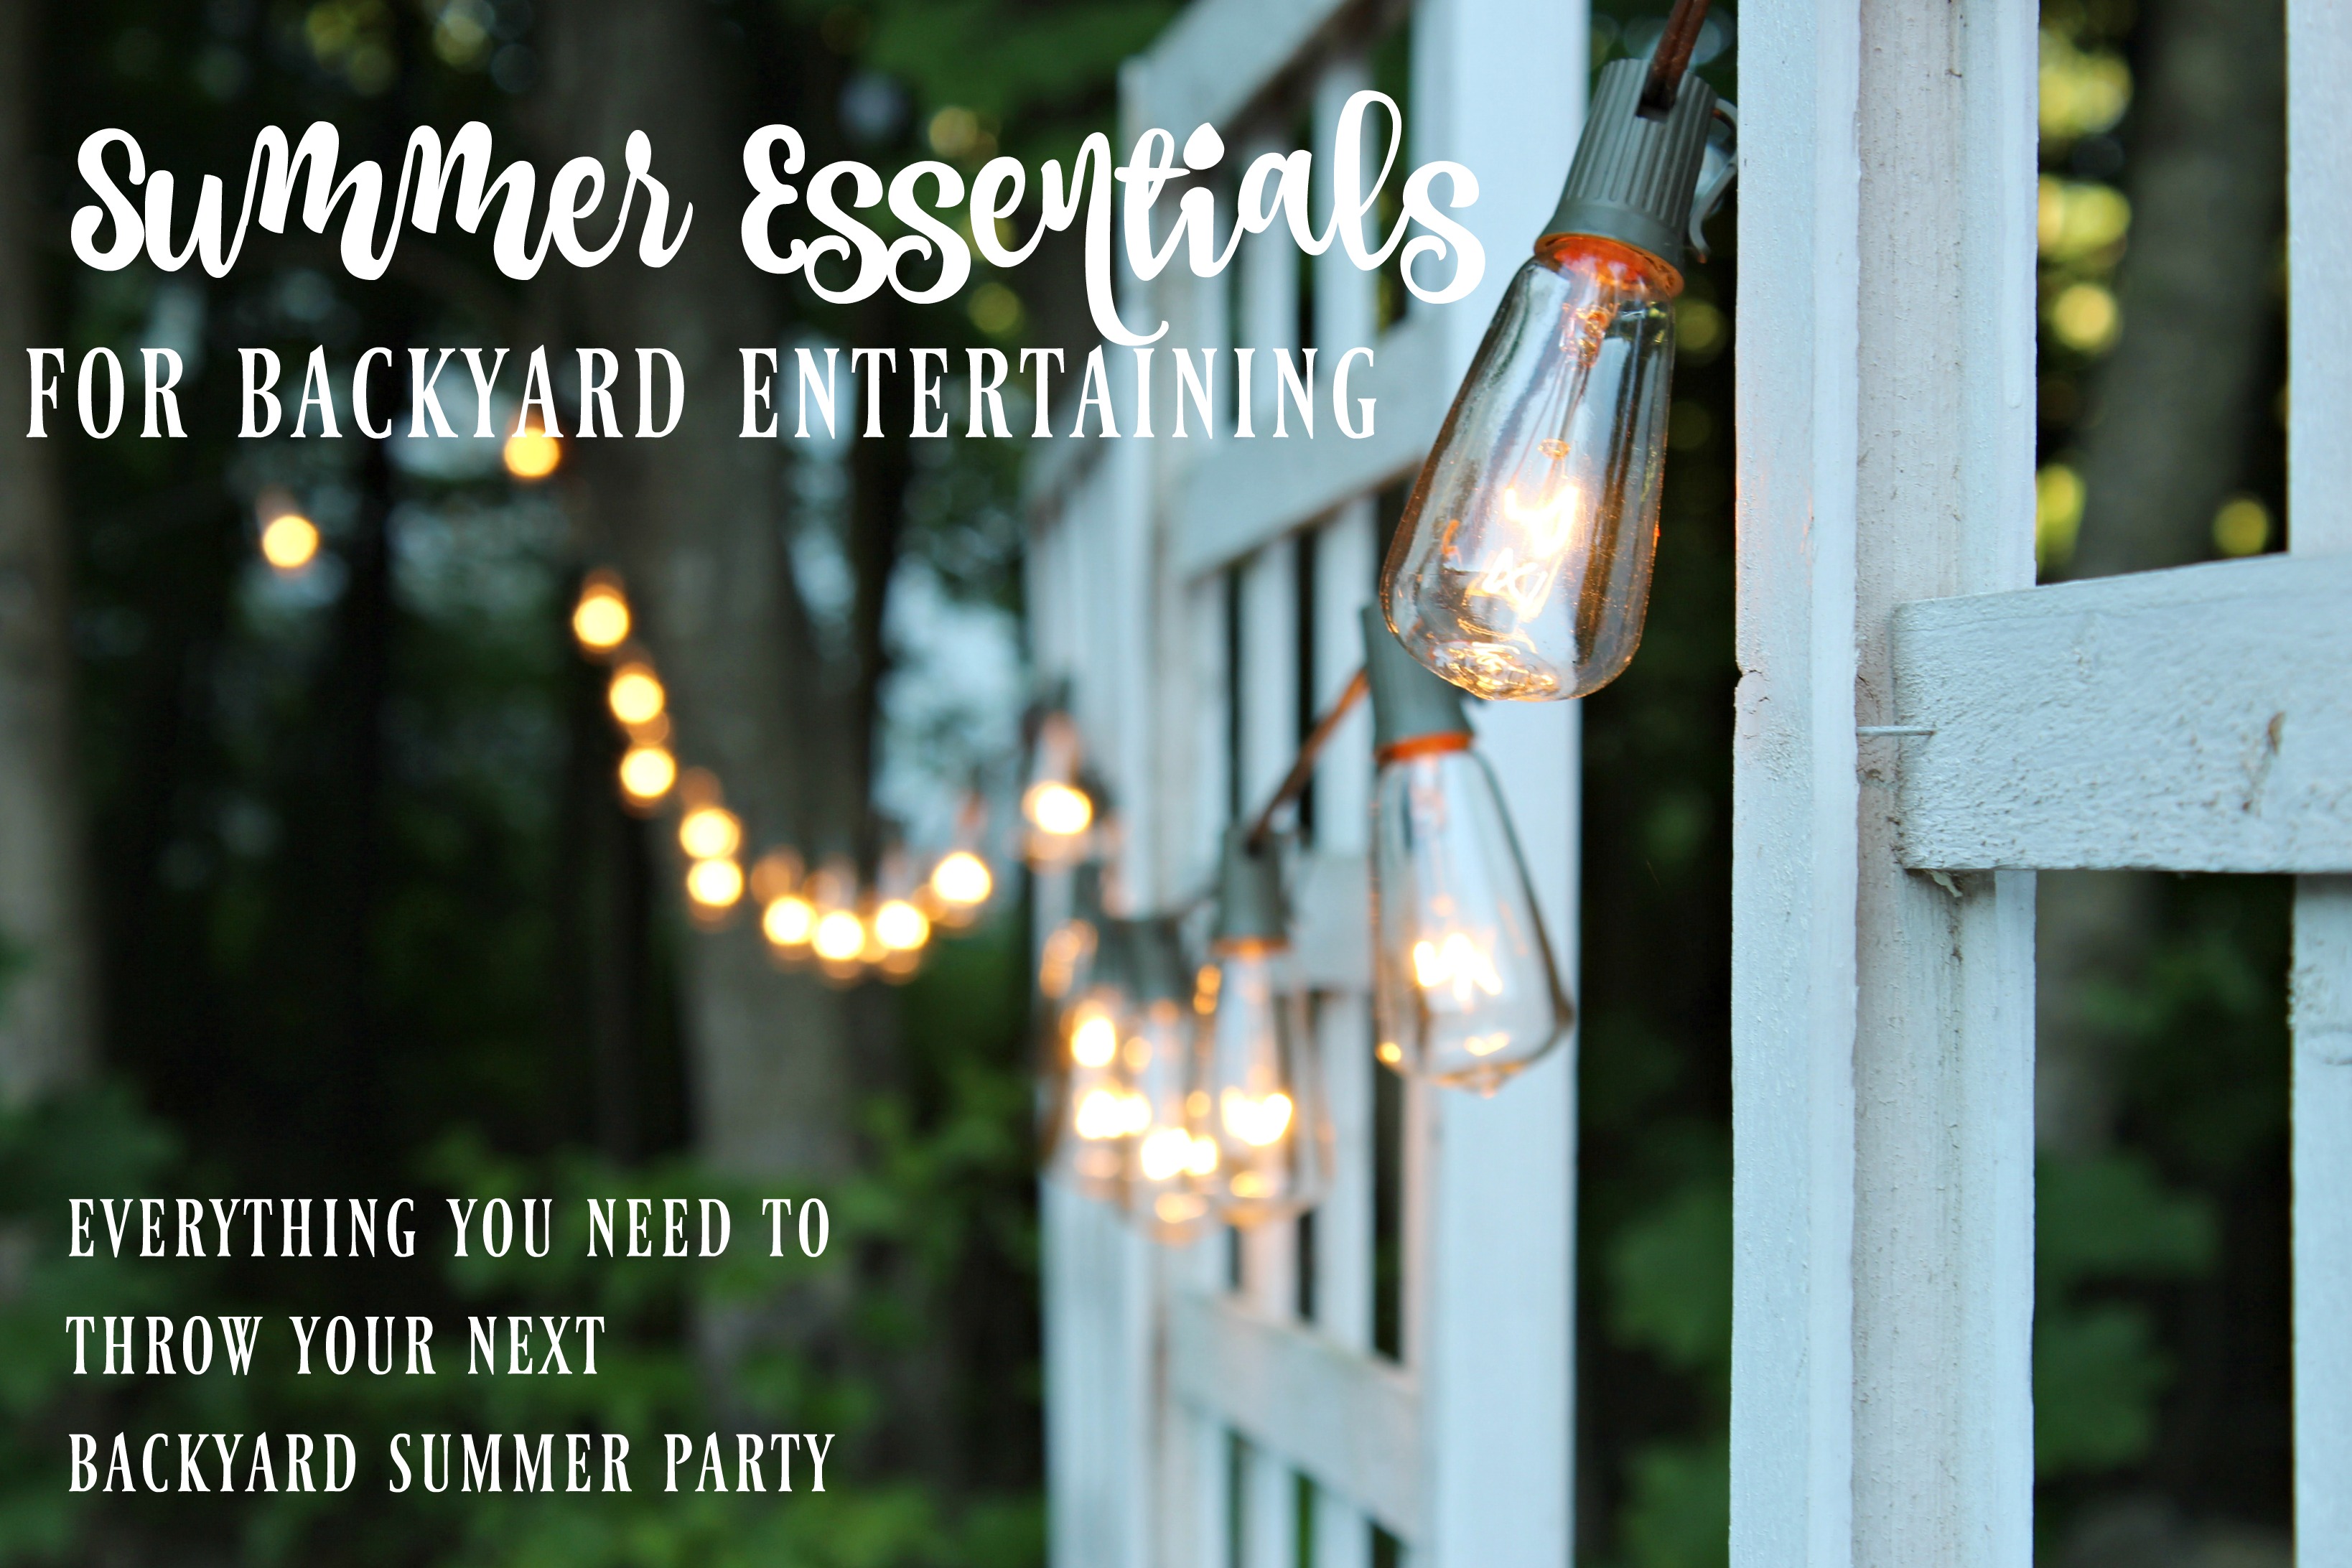 Summer Essentials for Backyard Entertaining